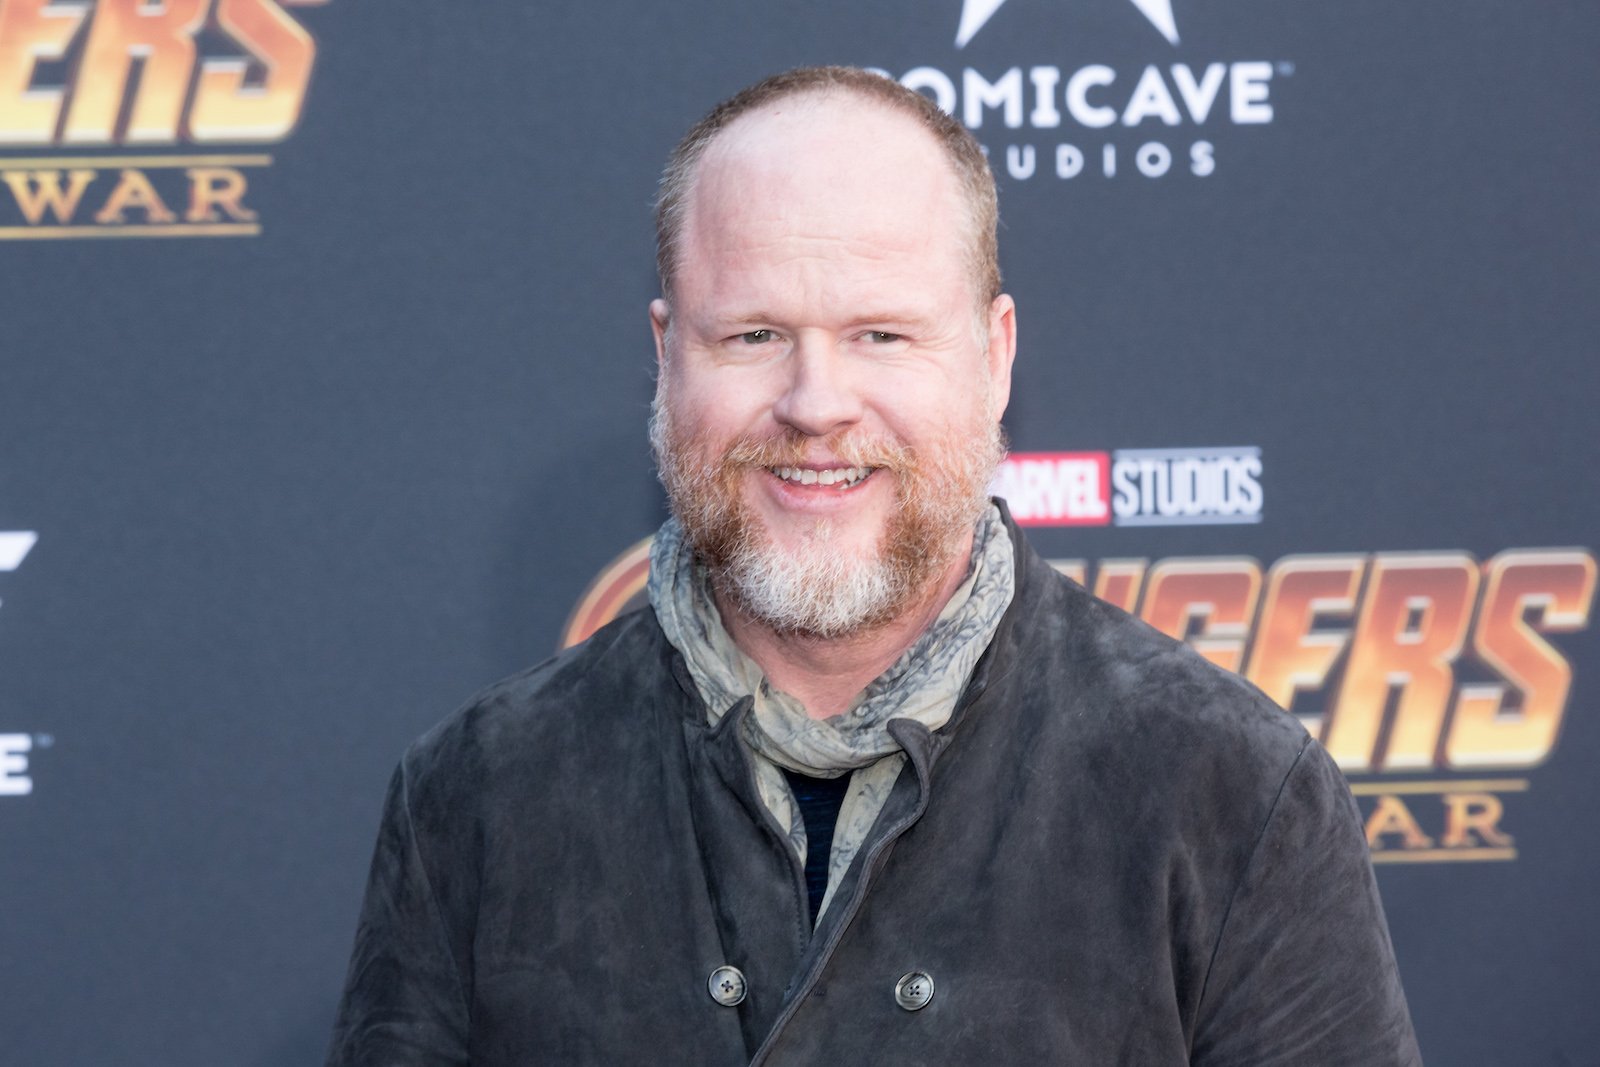 Joss Whedon attends the "Avengers: Infinity War" World Premiere